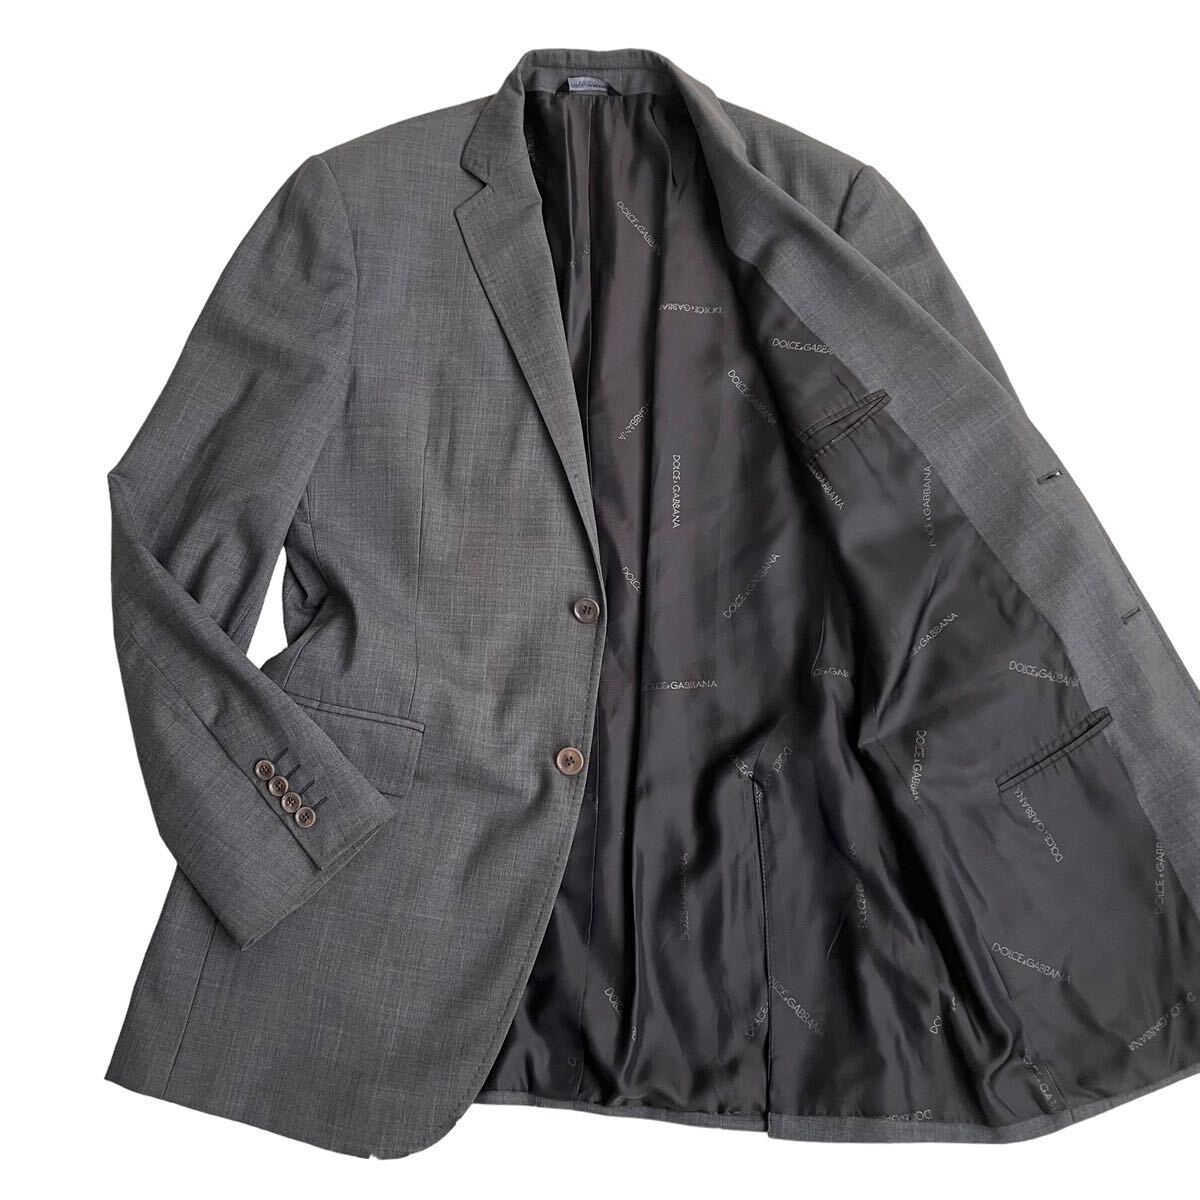 * DOLCE&GABBANA Dolce & Gabbana tailored jacket блейзер 2. шерсть XL ранг подкладка бренд Logo мужской *